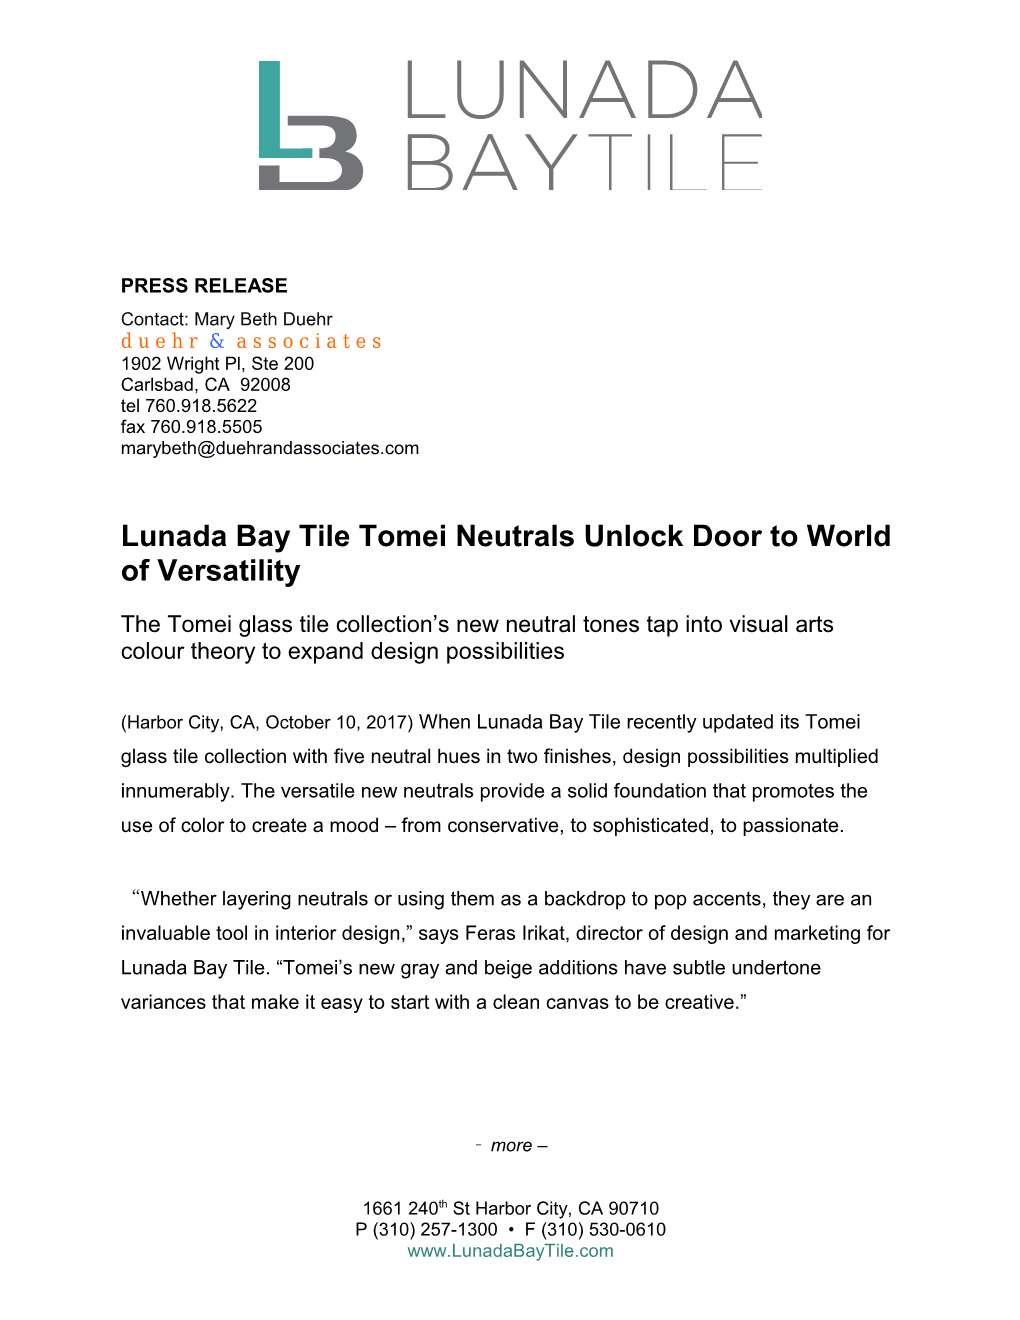 Lunada Bay Tile Press Release (Continued)